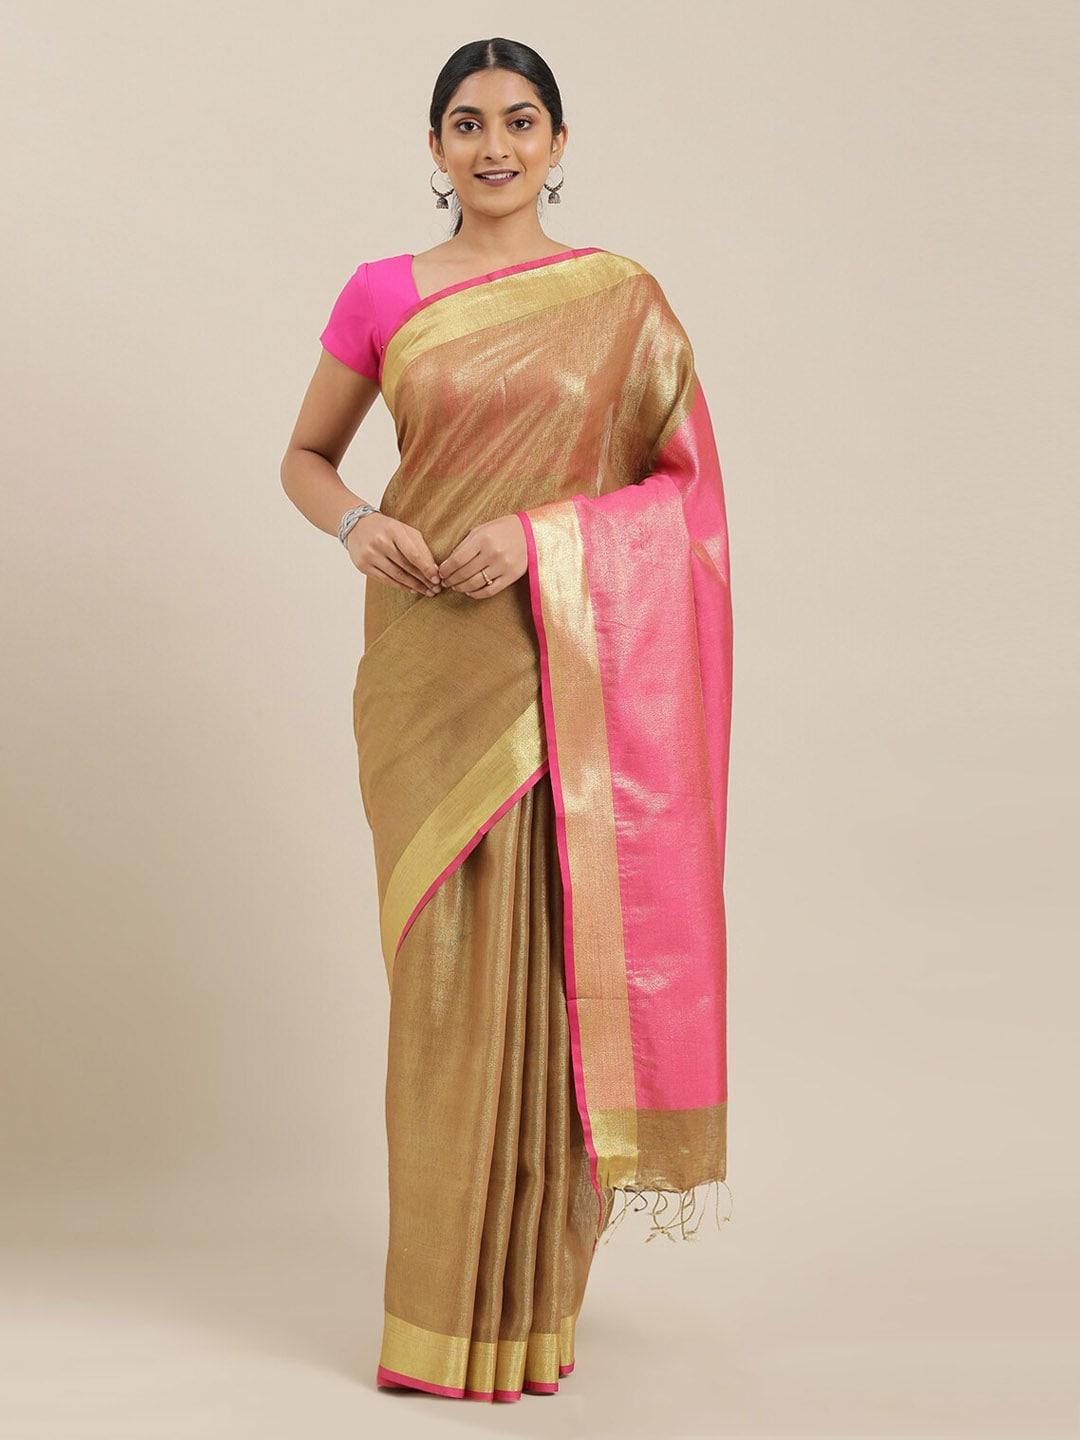 The Chennai Silks Gold-Toned Solid Art Silk Saree